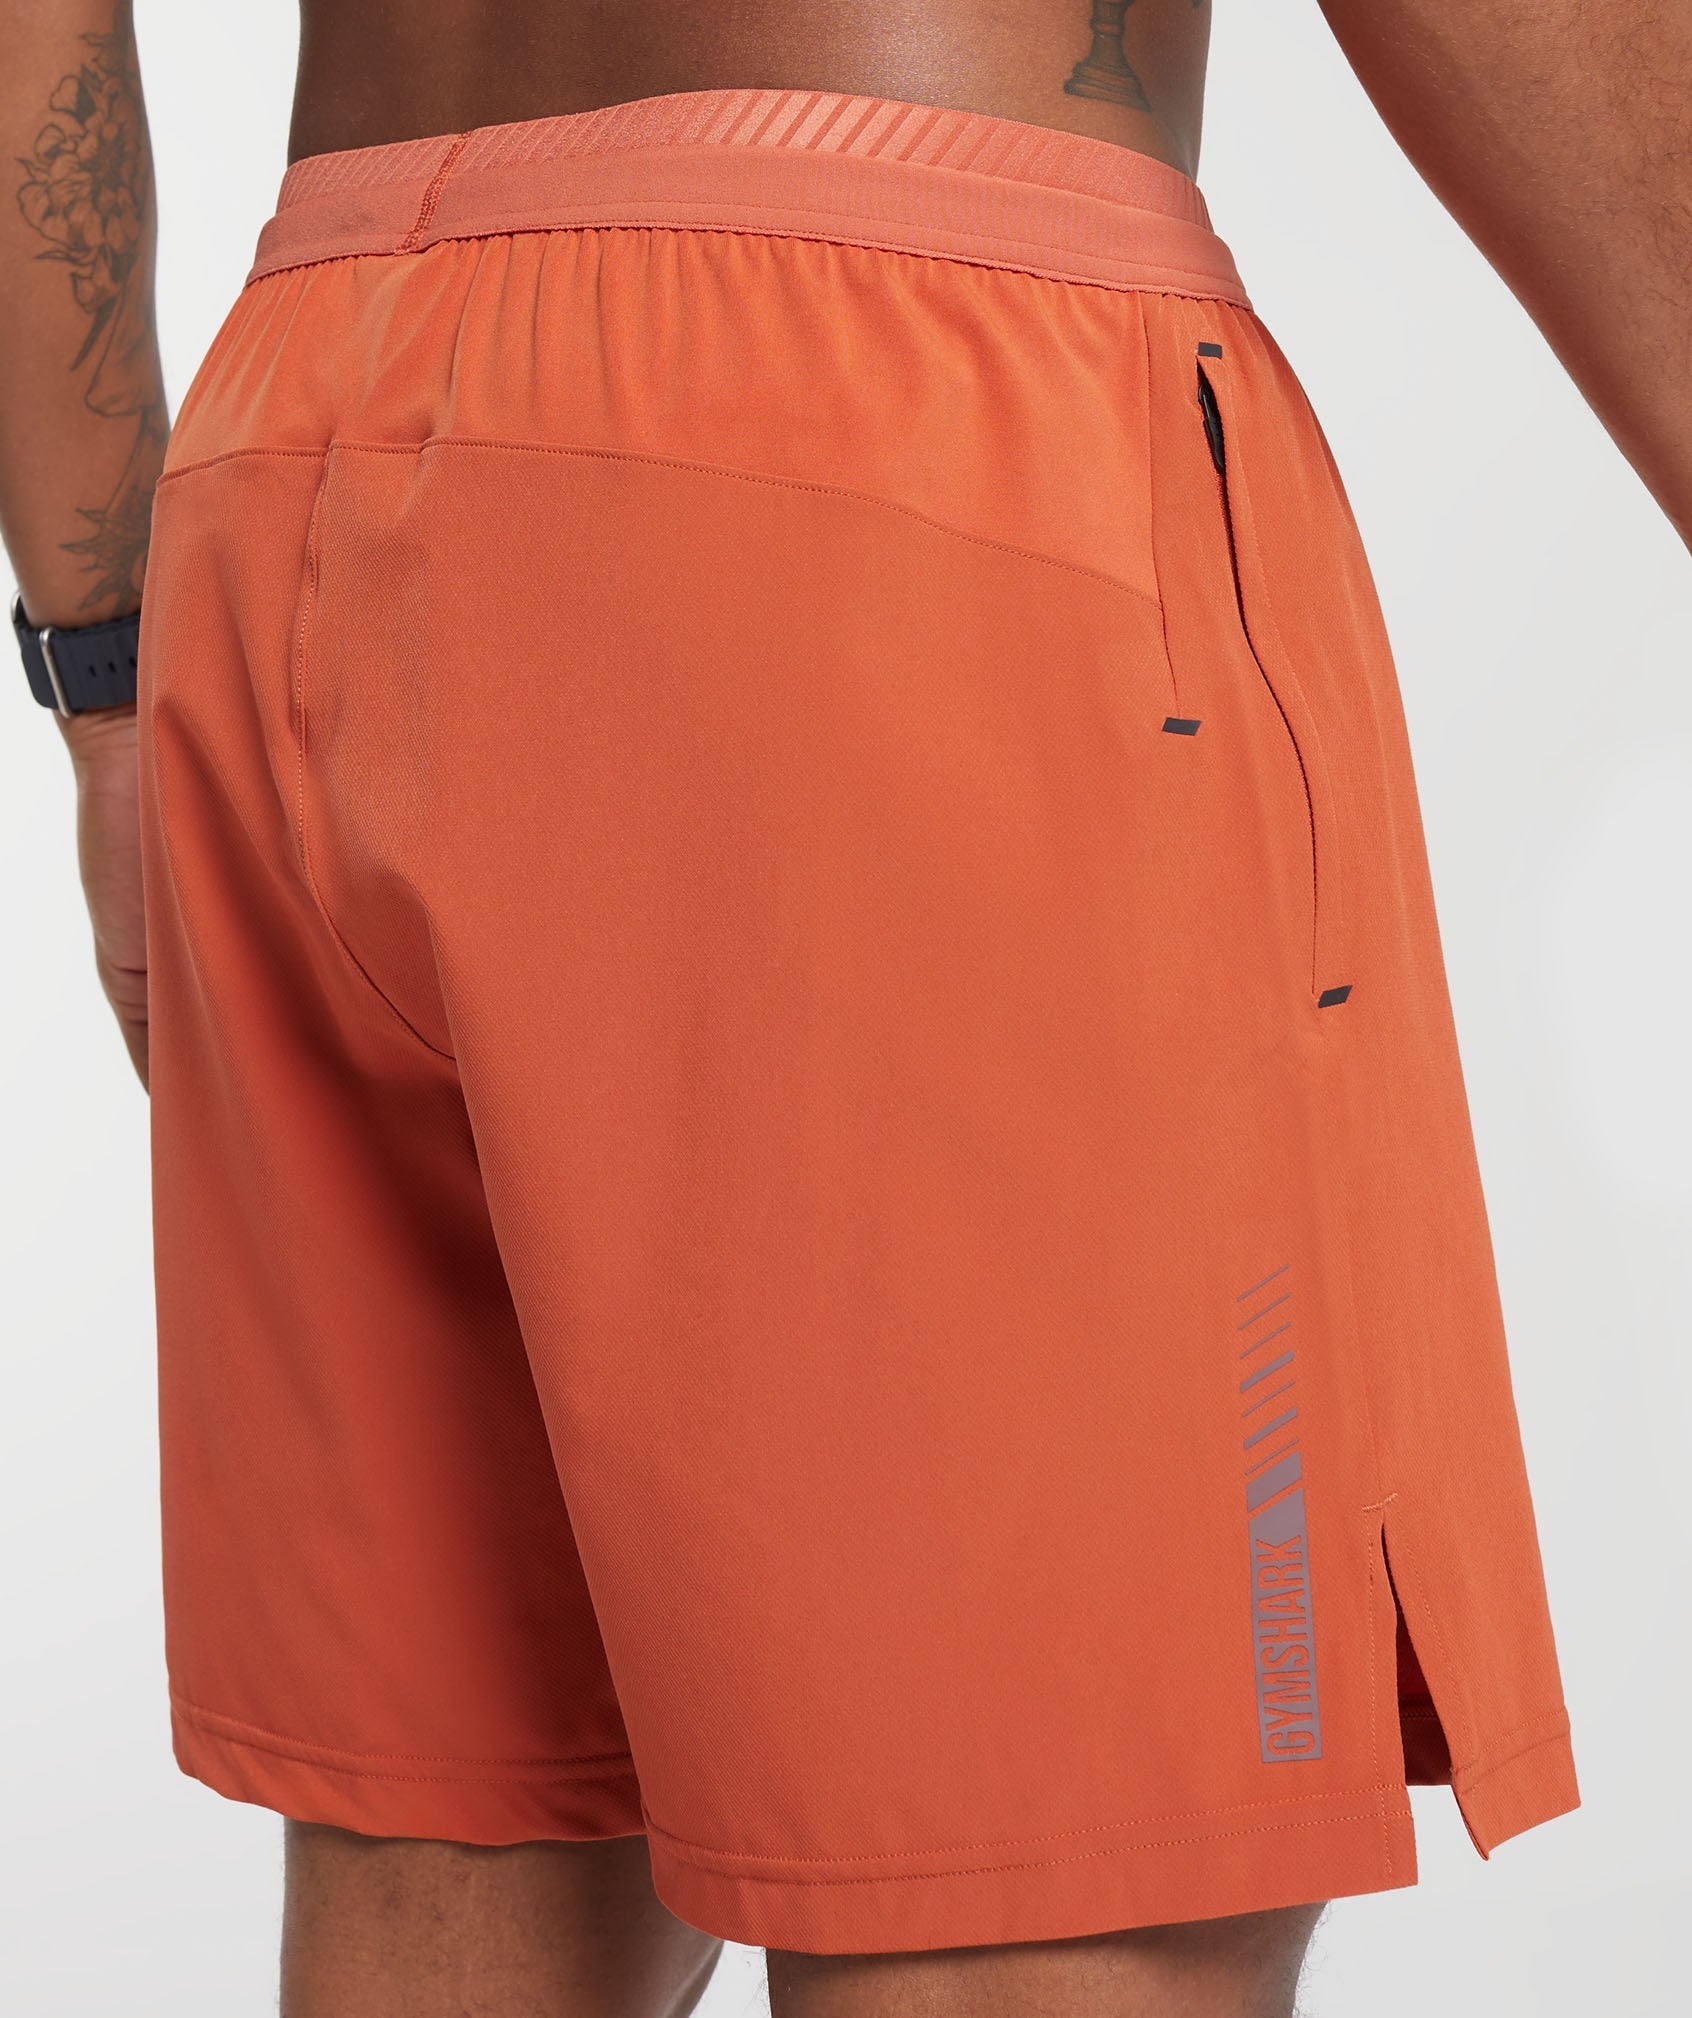 Apex 7" Hybrid Shorts in Rust Orange - view 7